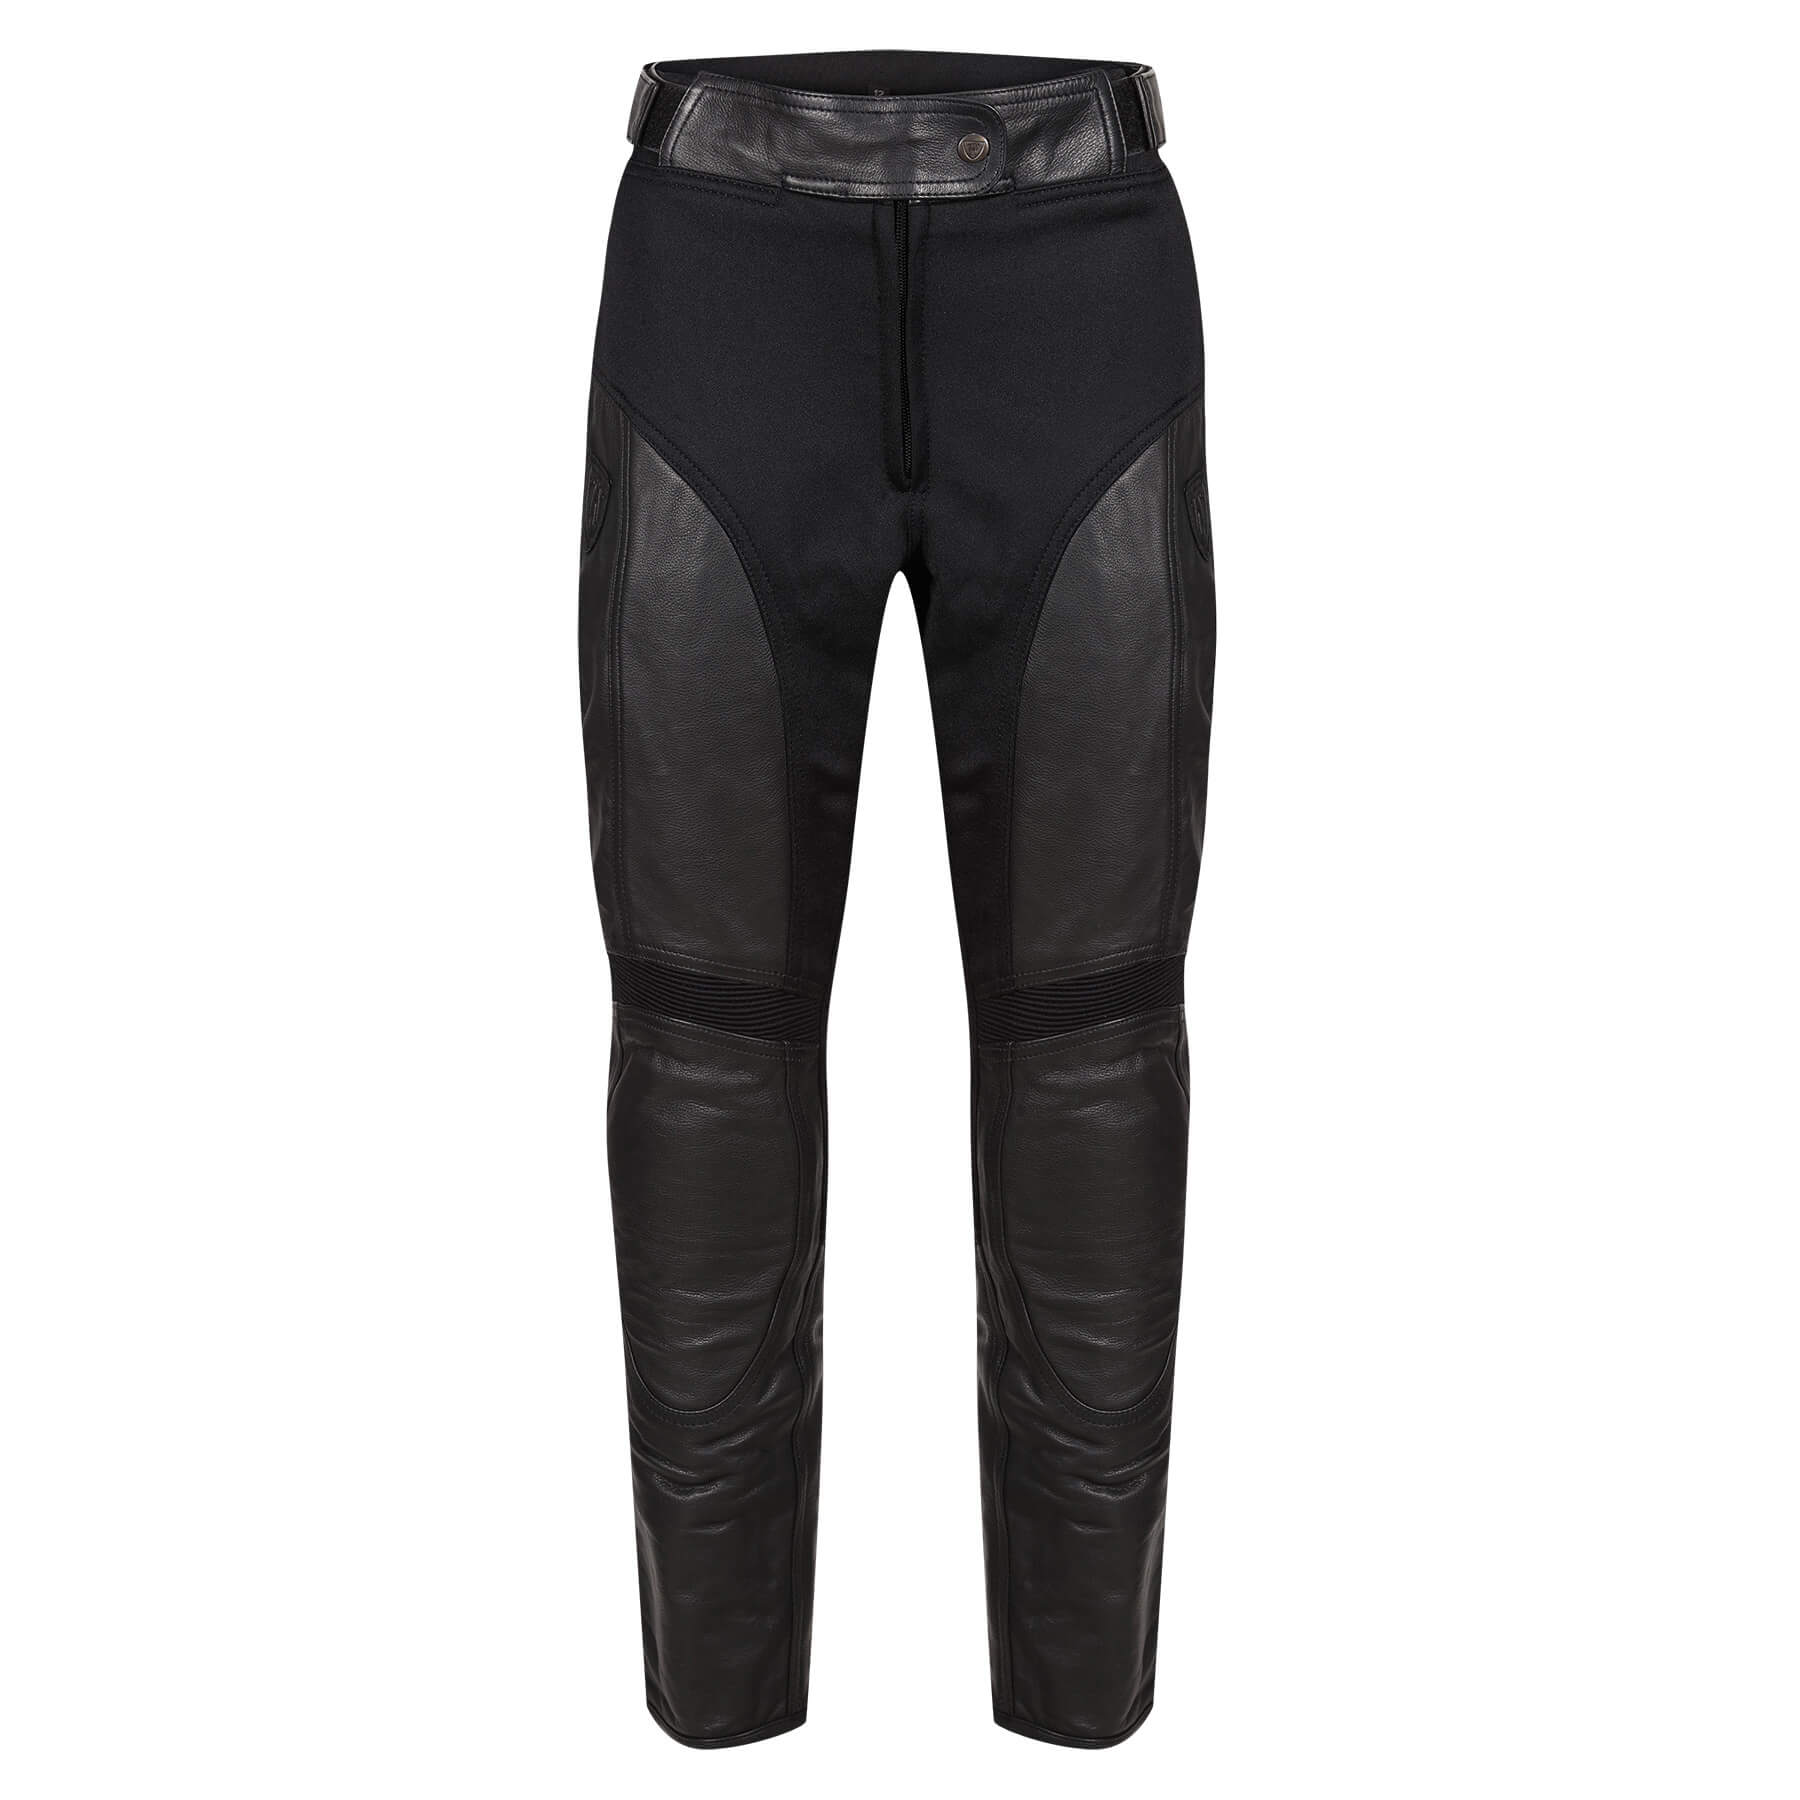 MotoGirl | Fiona Leather Trousers - Black - Women's Pants - Peak Moto